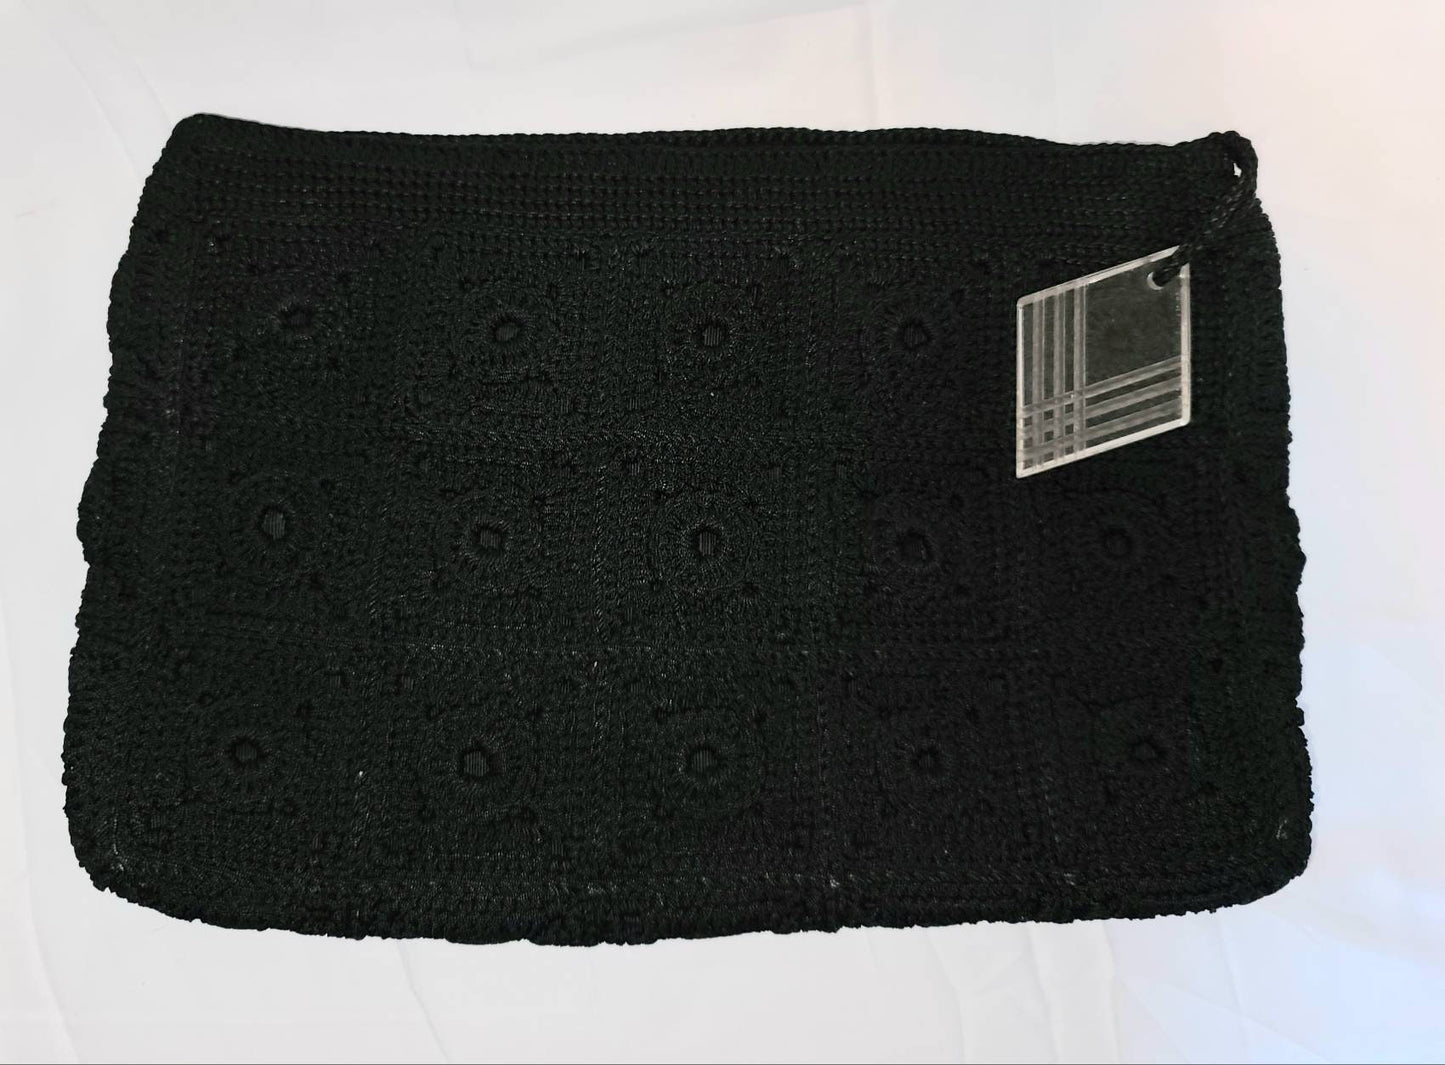 SALE Vintage 1940s Purse Large Black Crochet Clutch Handbag Carved Lucite Diamond Zipper Pull WWII Art Deco Rockabilly